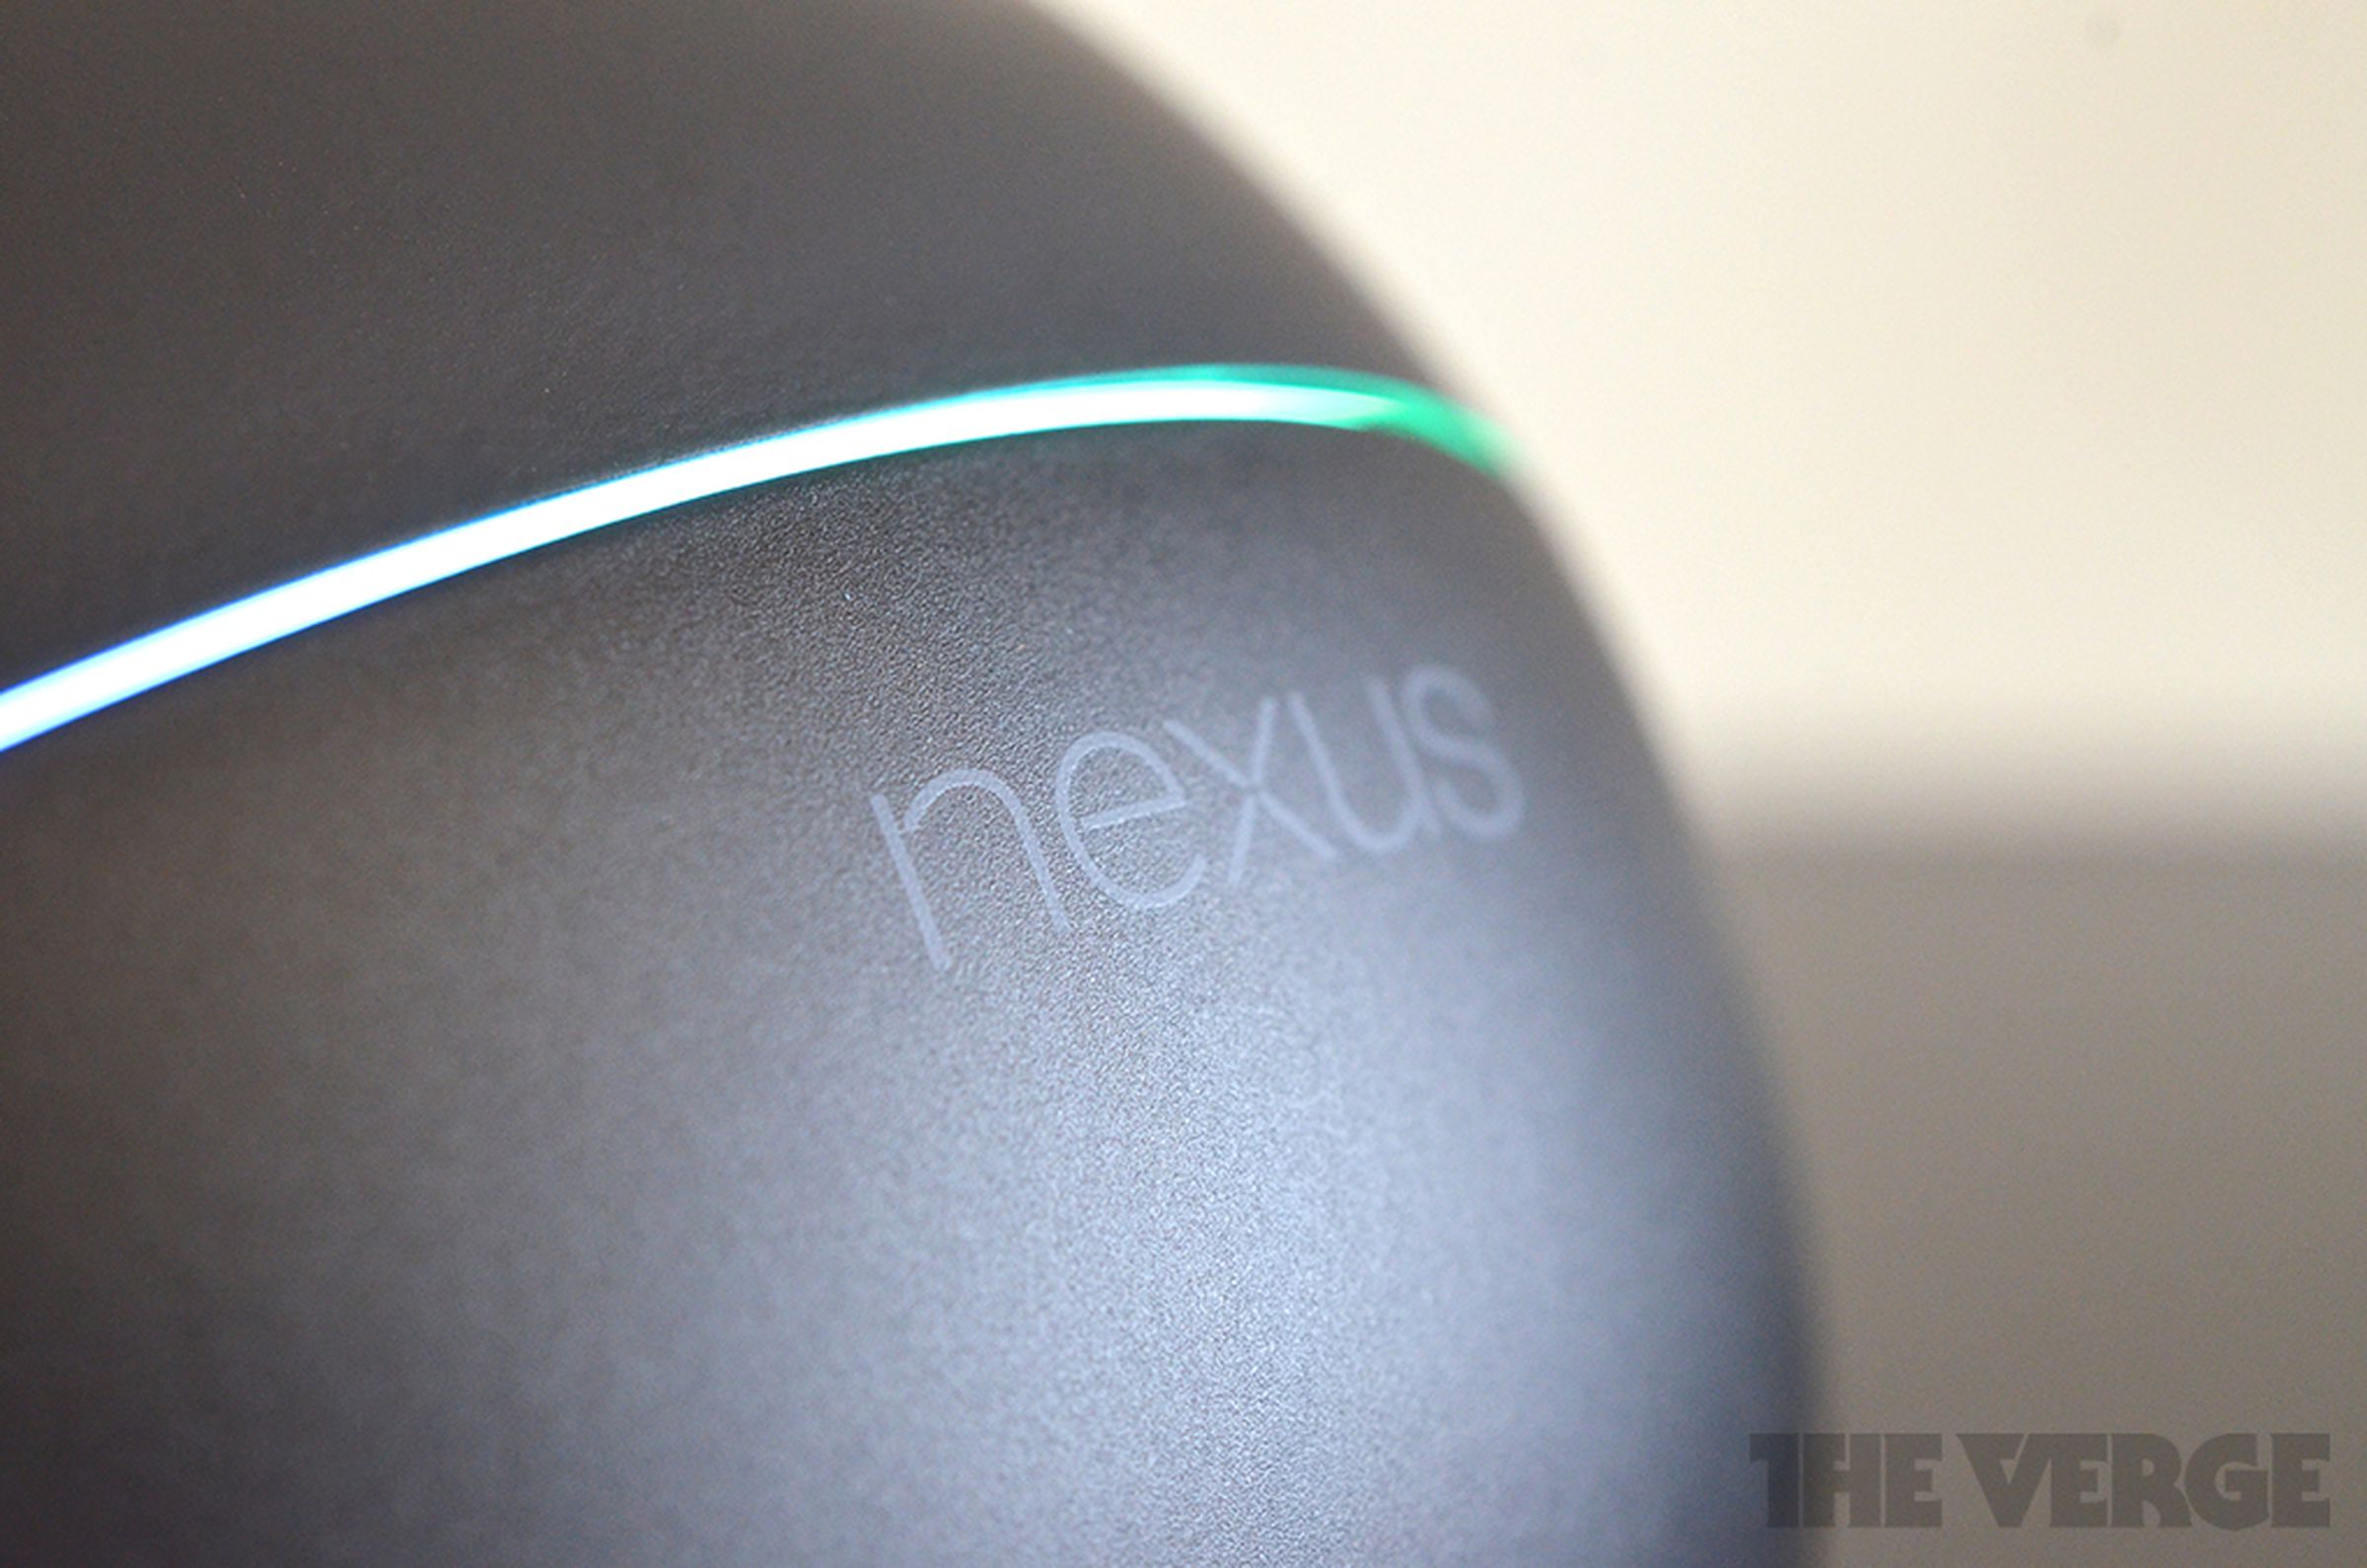 Google Nexus Q review hardware photos